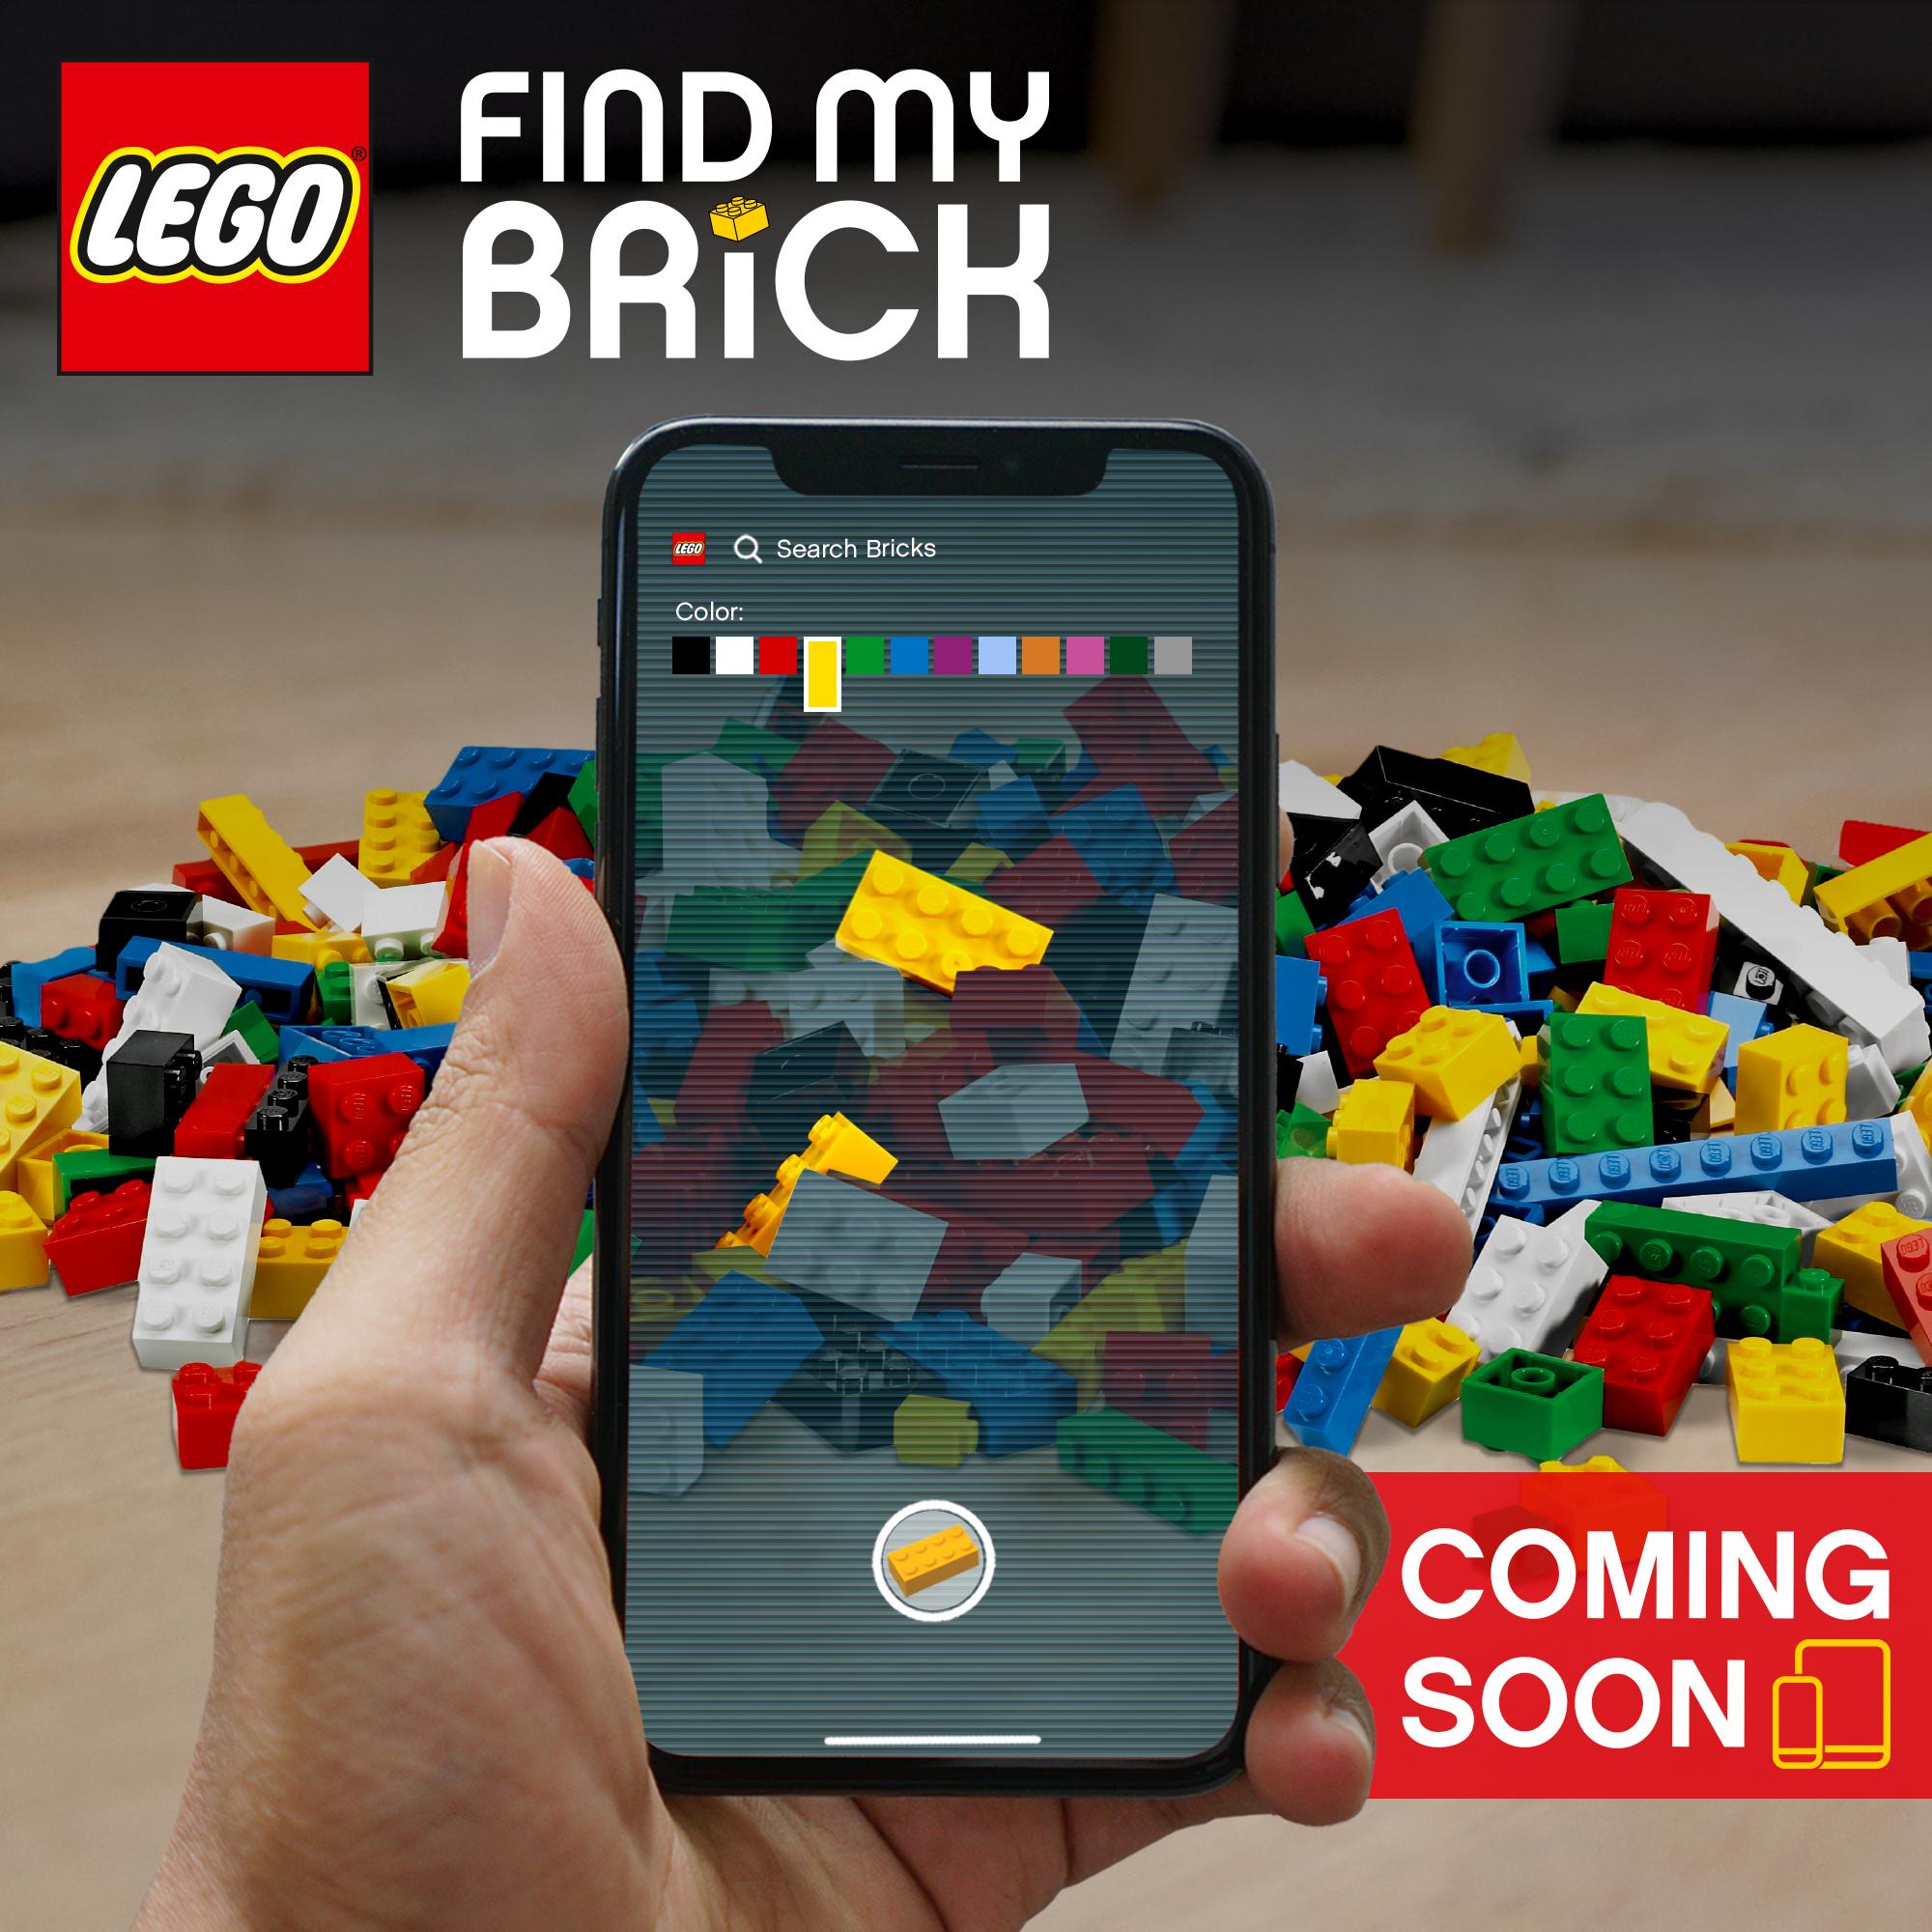 vision Tilbageholdelse peddling LEGO on Twitter: "The long search is finally over... 📱 #FindMyBrick  https://t.co/3yBIPJ2OPk" / Twitter